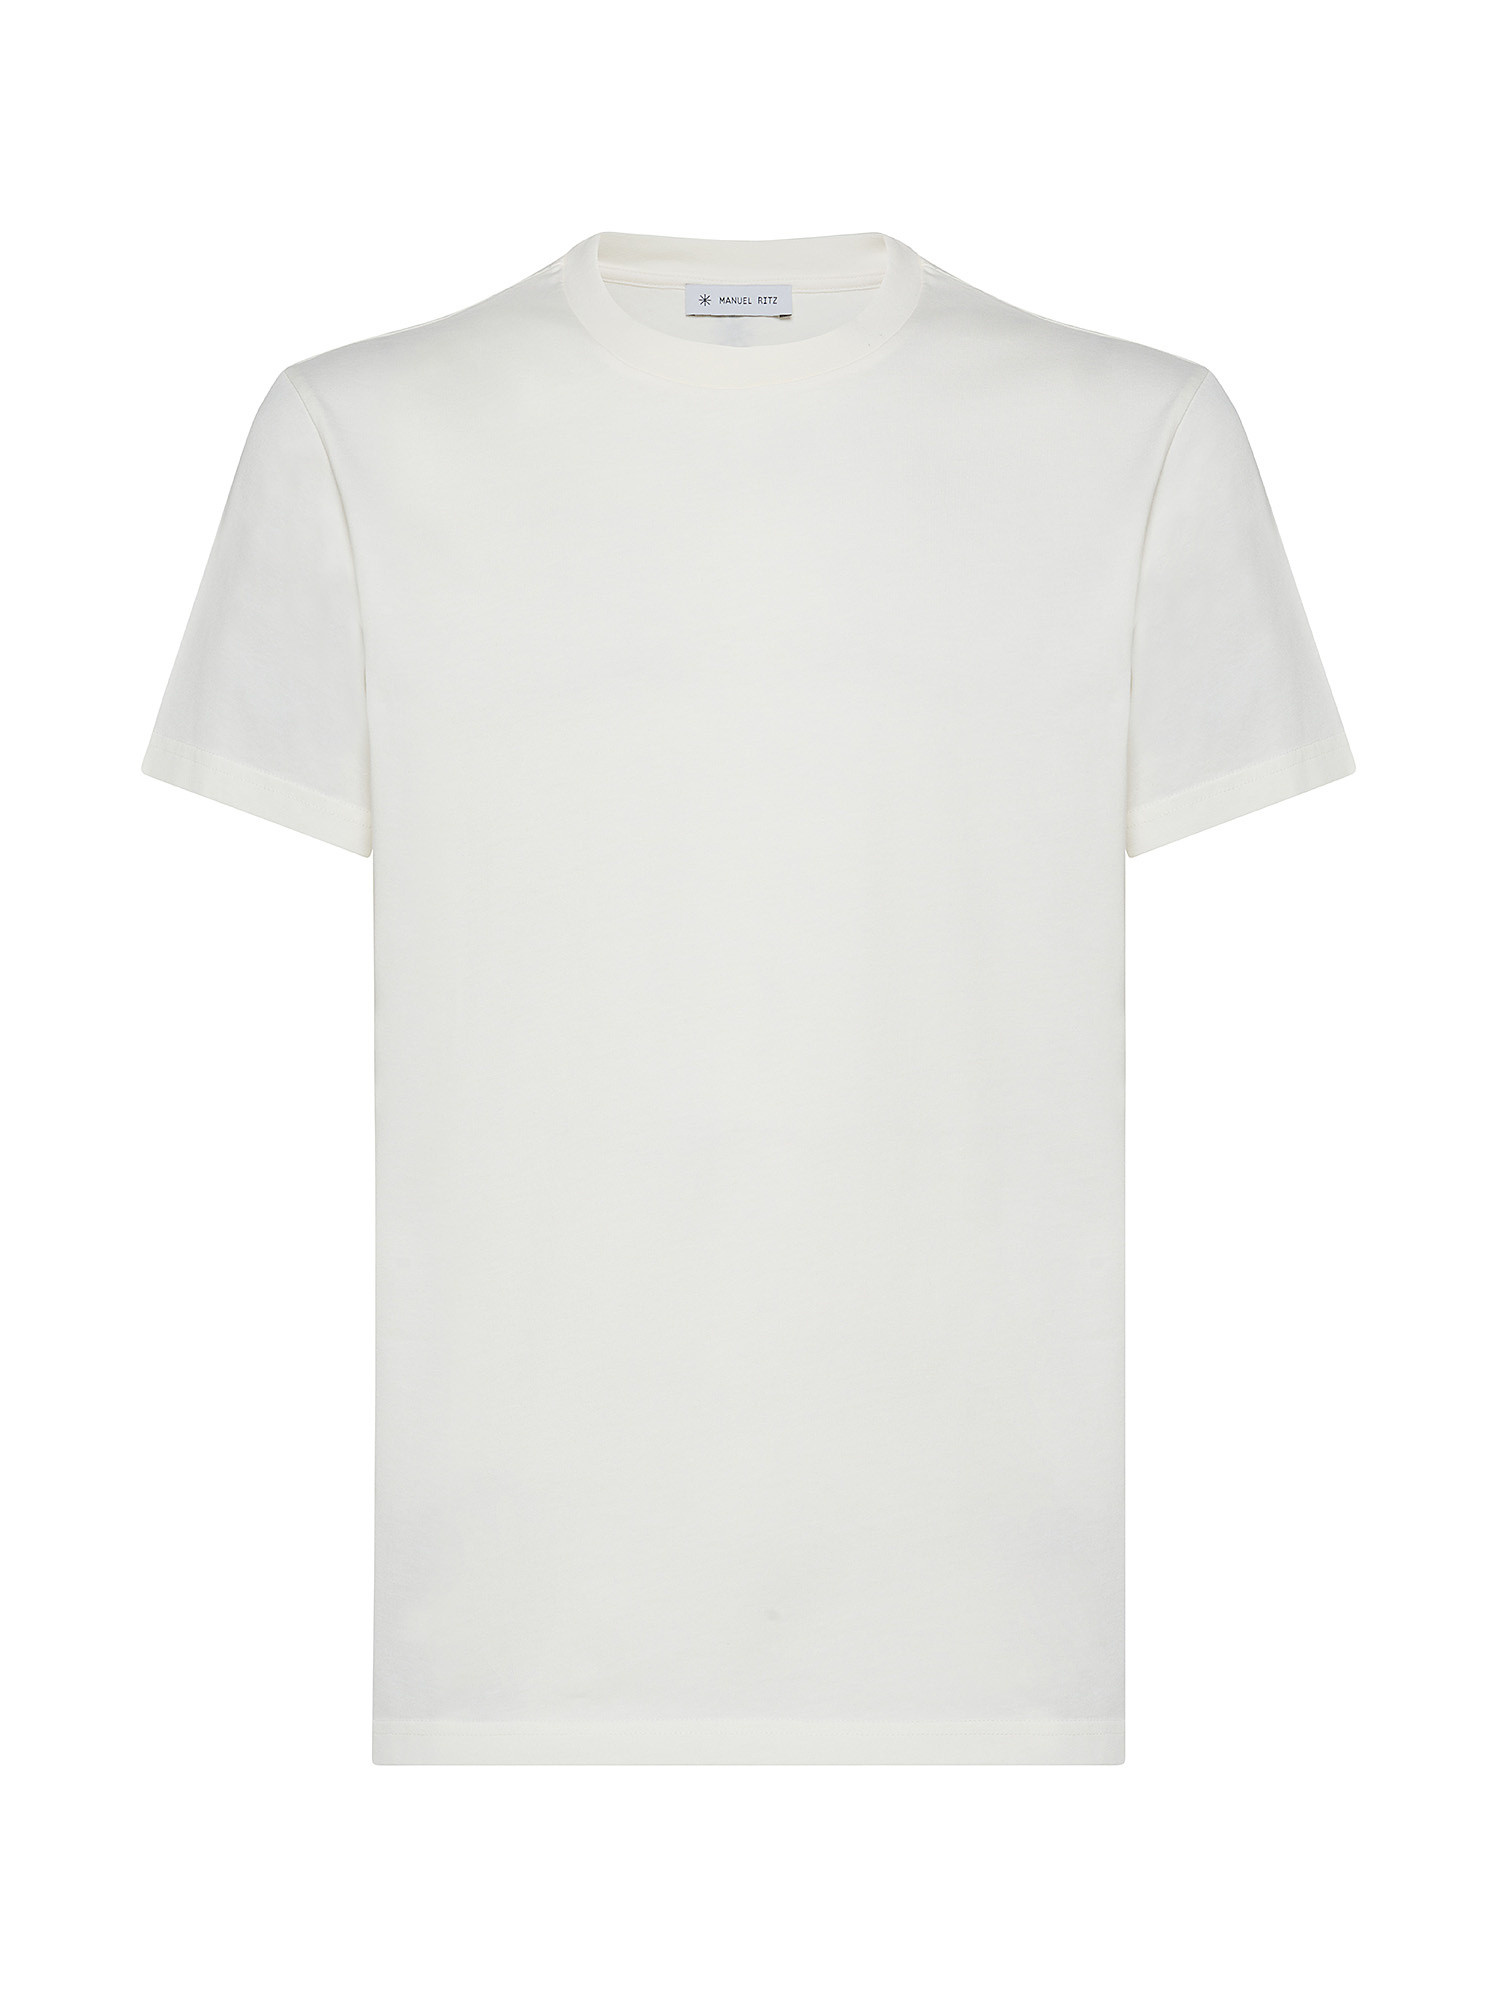 Manuel Ritz - Cotton T-shirt, White, large image number 0